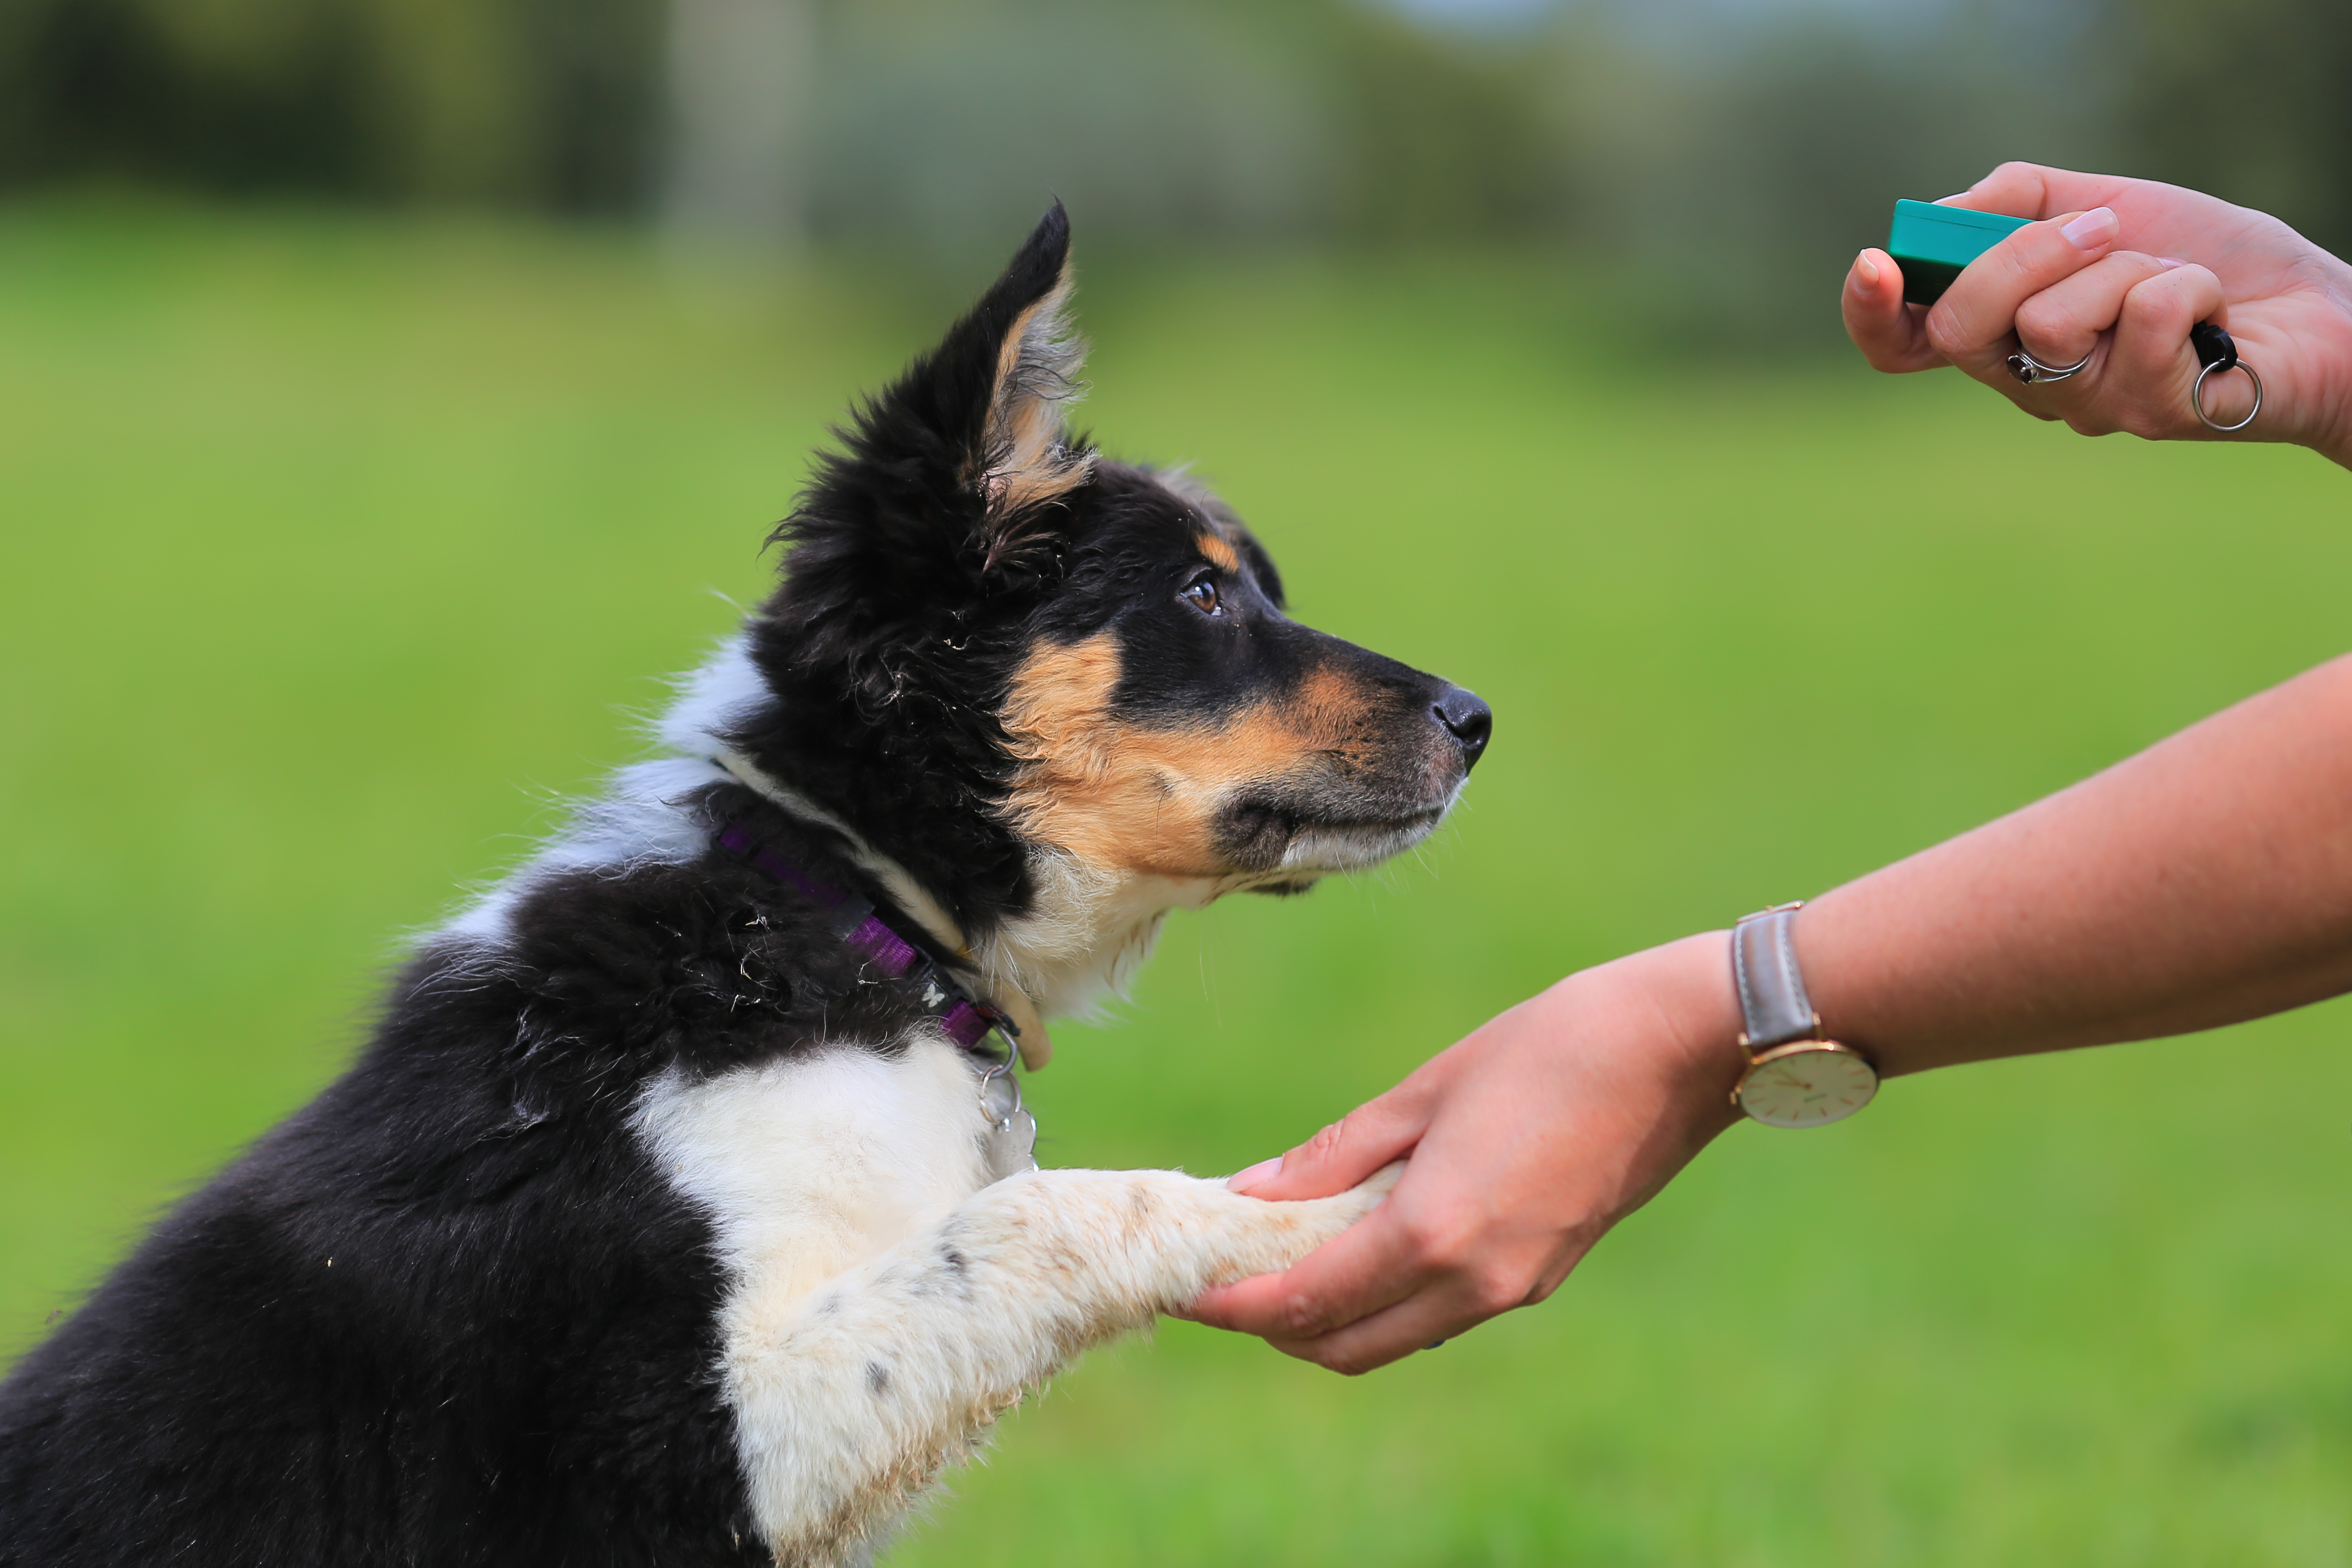 Dog Training - Sit n Stay Pet Services - Orchard Park, West Seneca